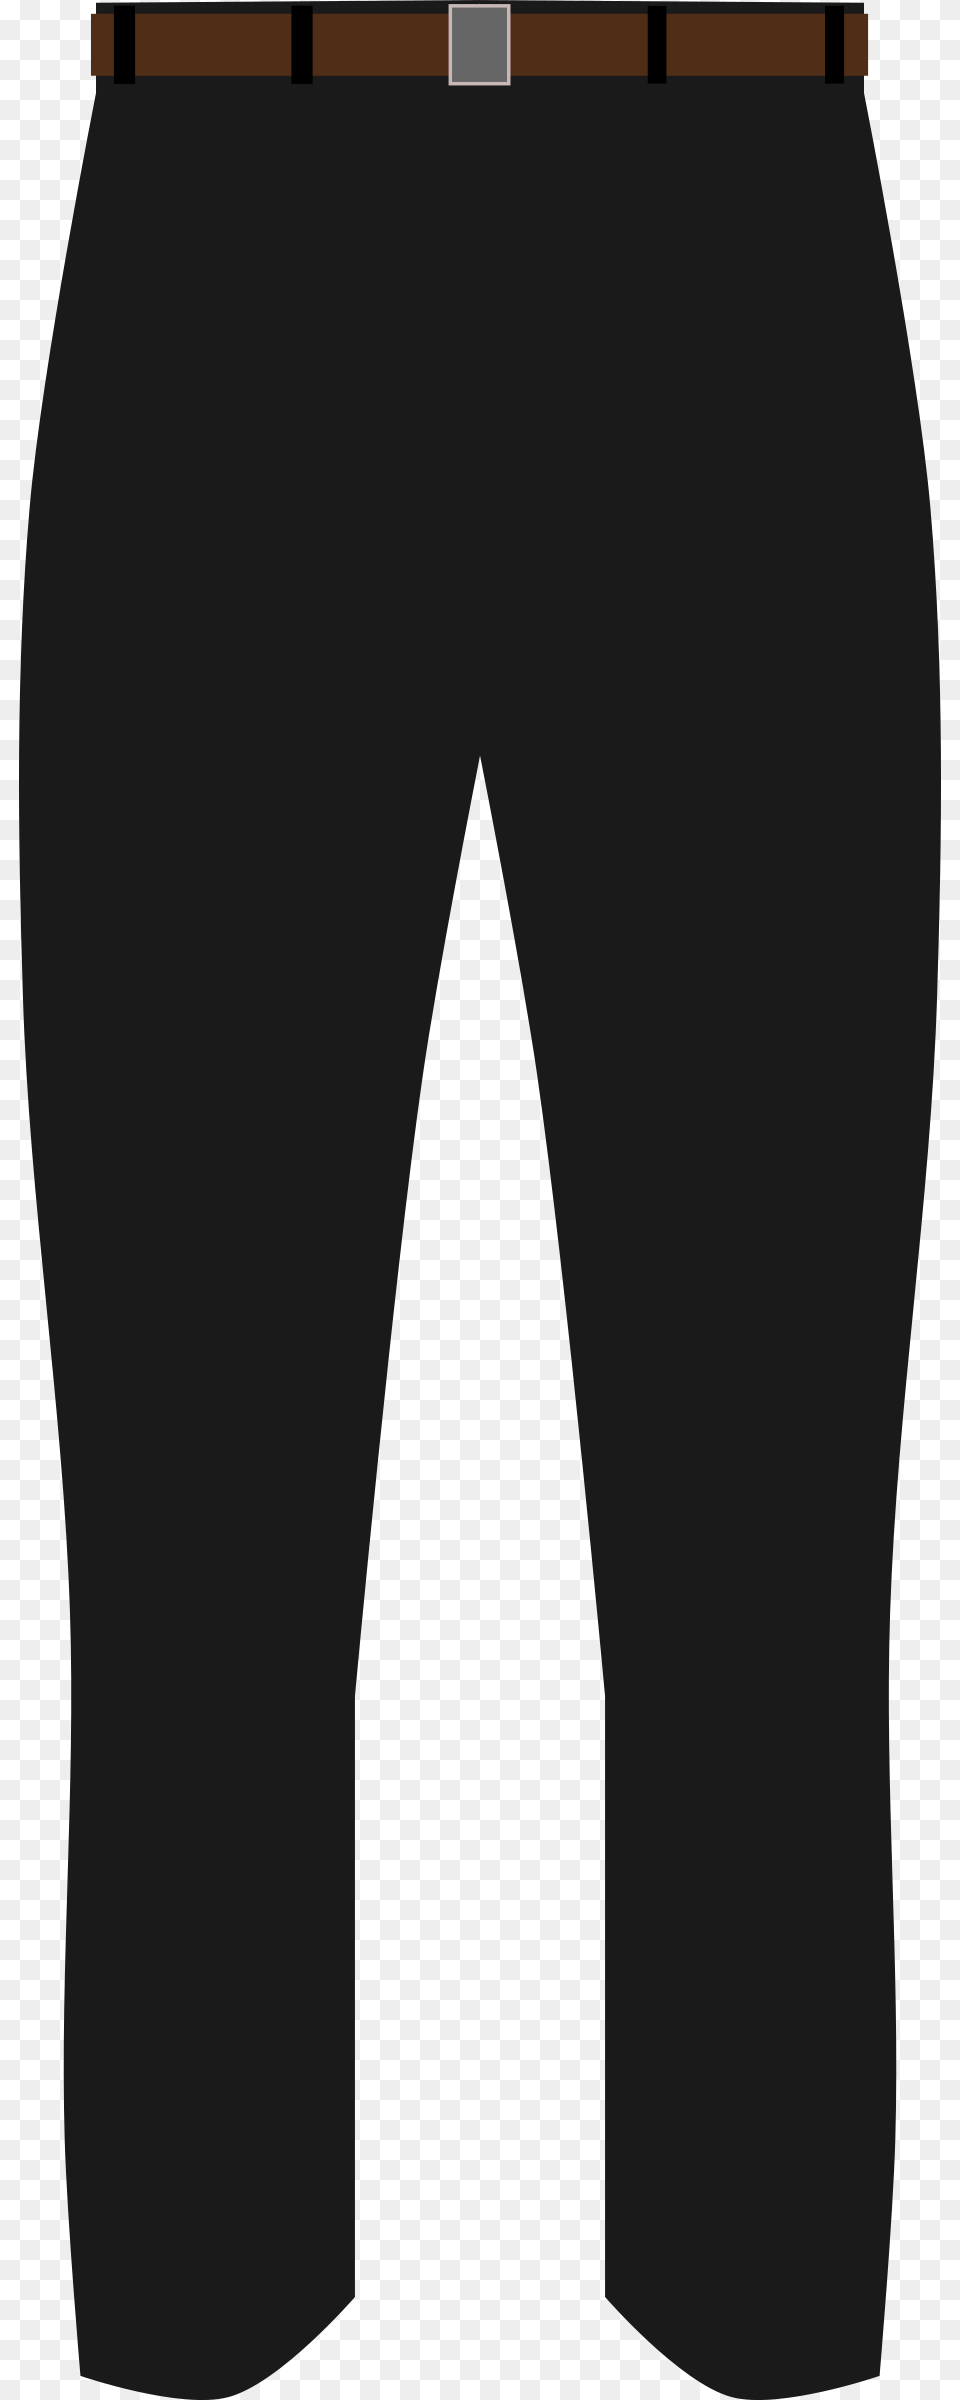 Black Pants Clip Art, Clothing, Shorts Png